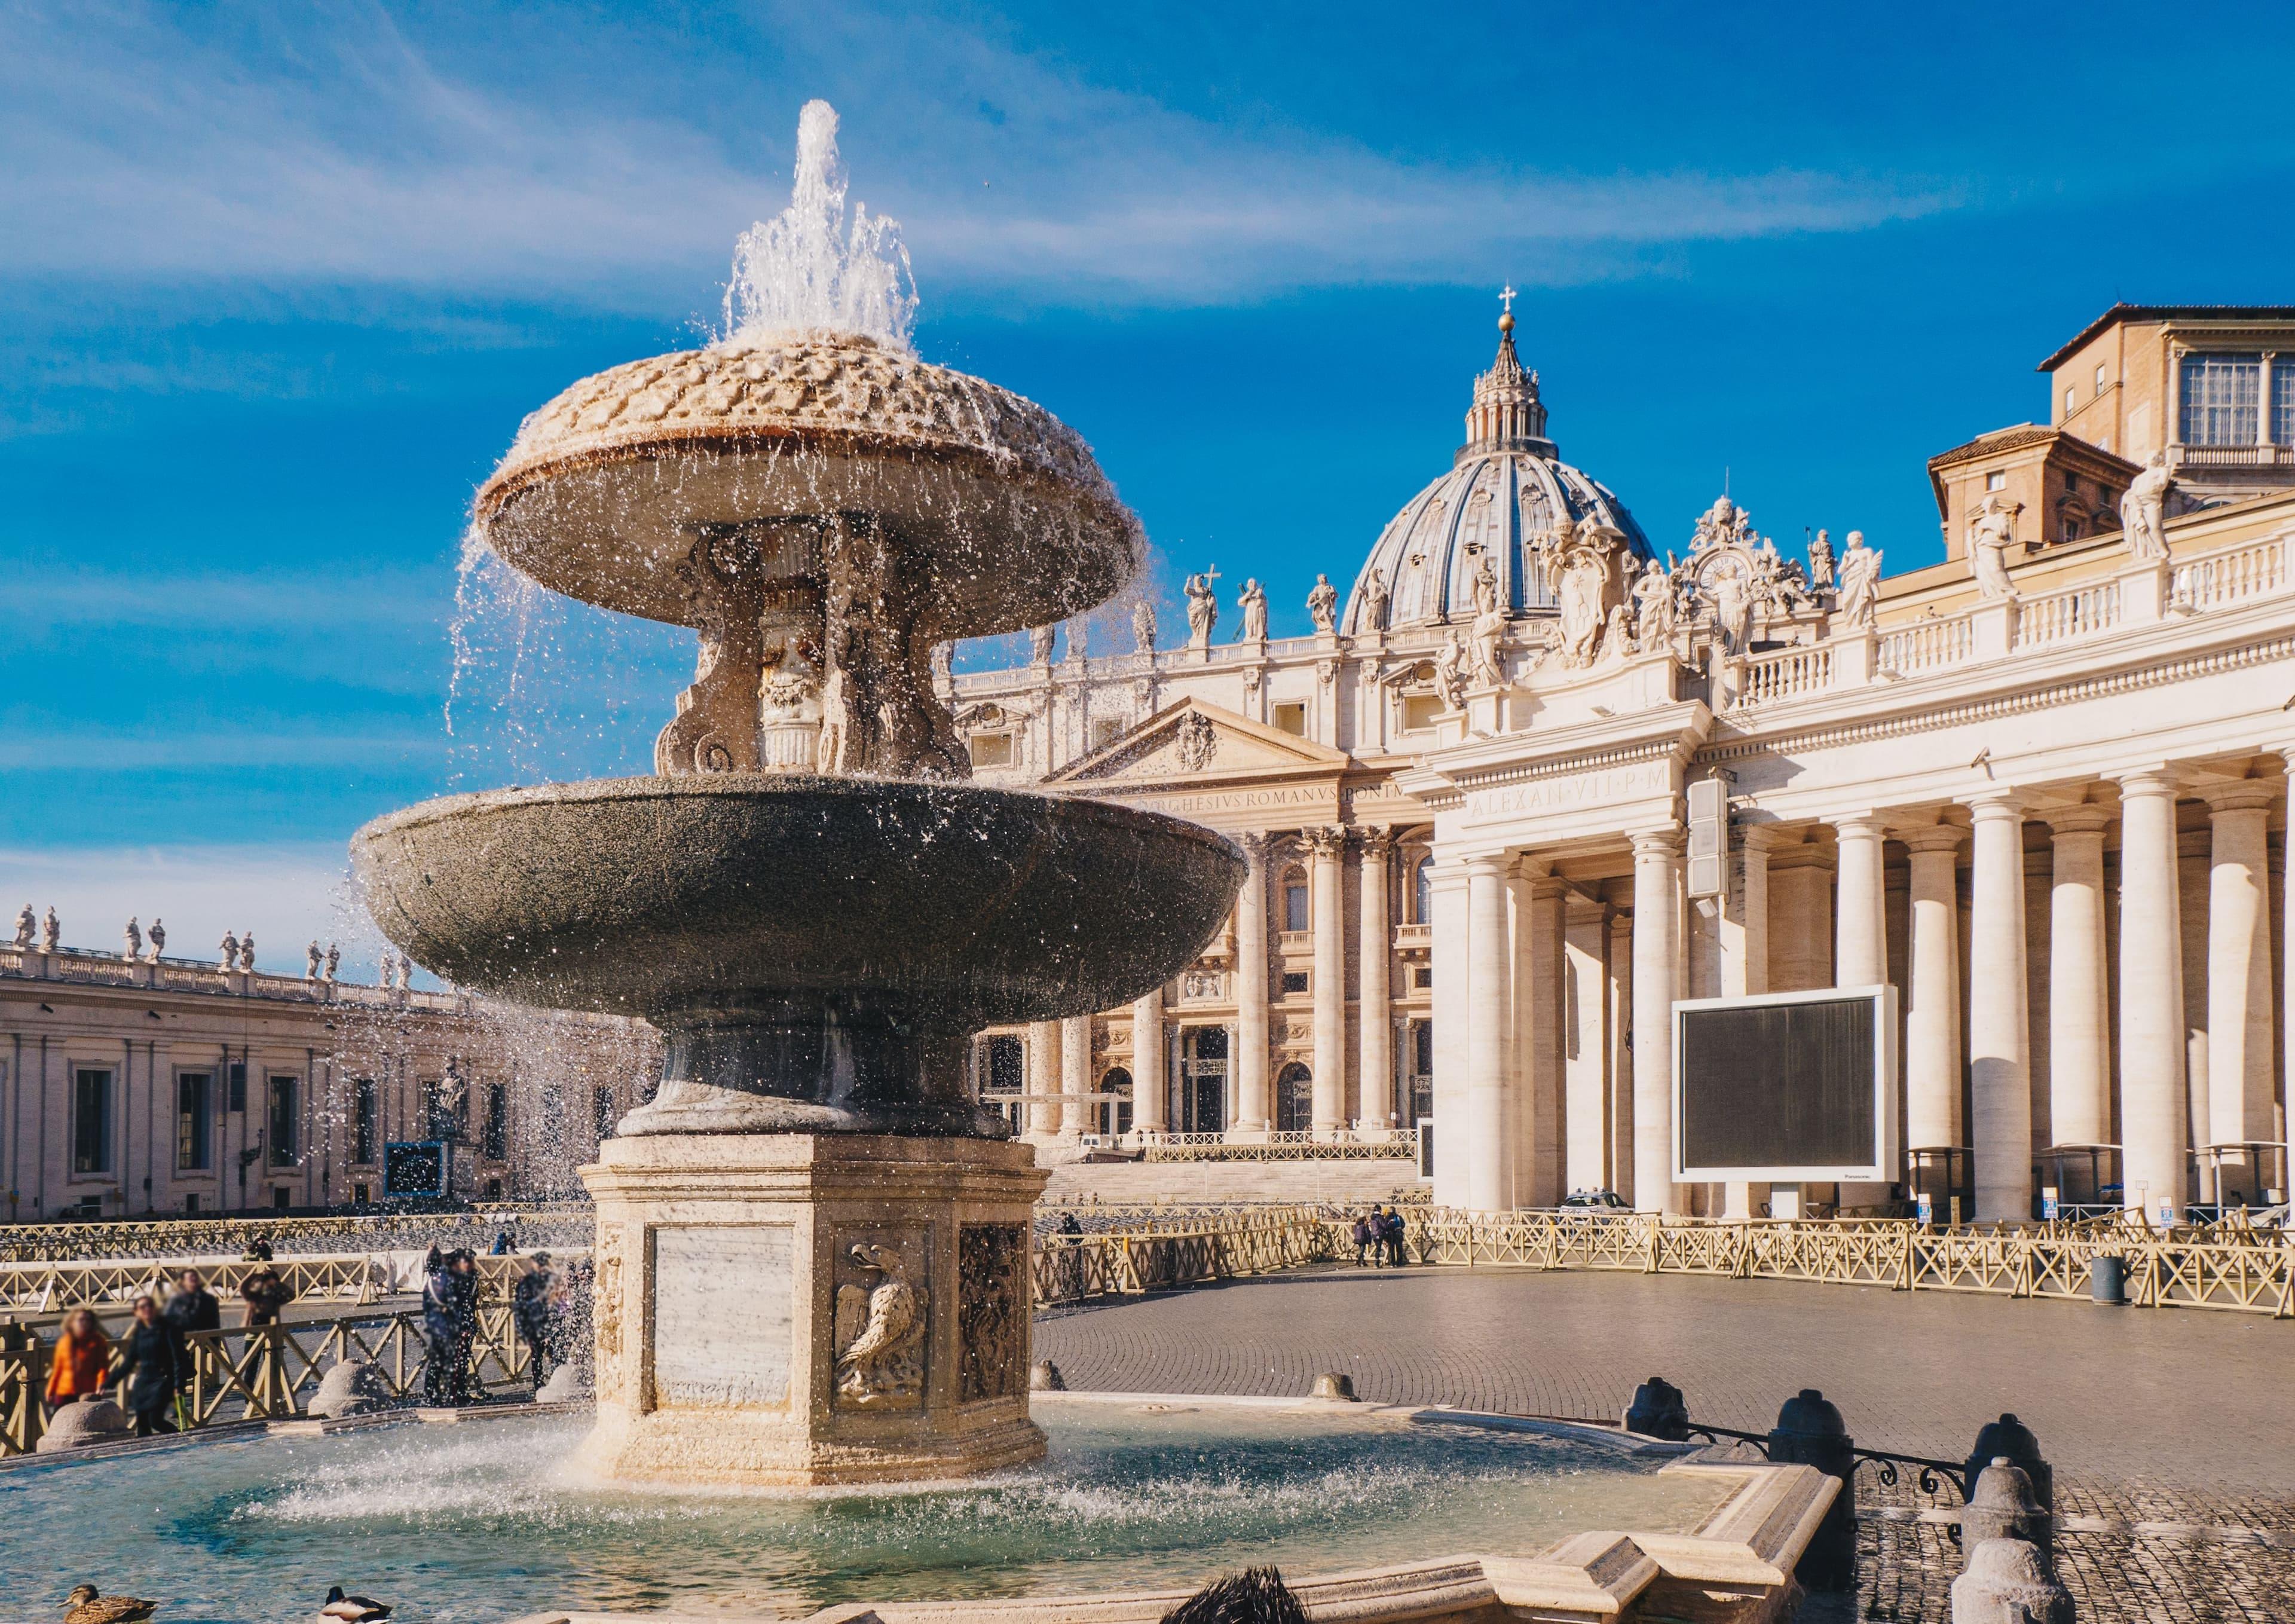 St. Peter's Basilica Fountain